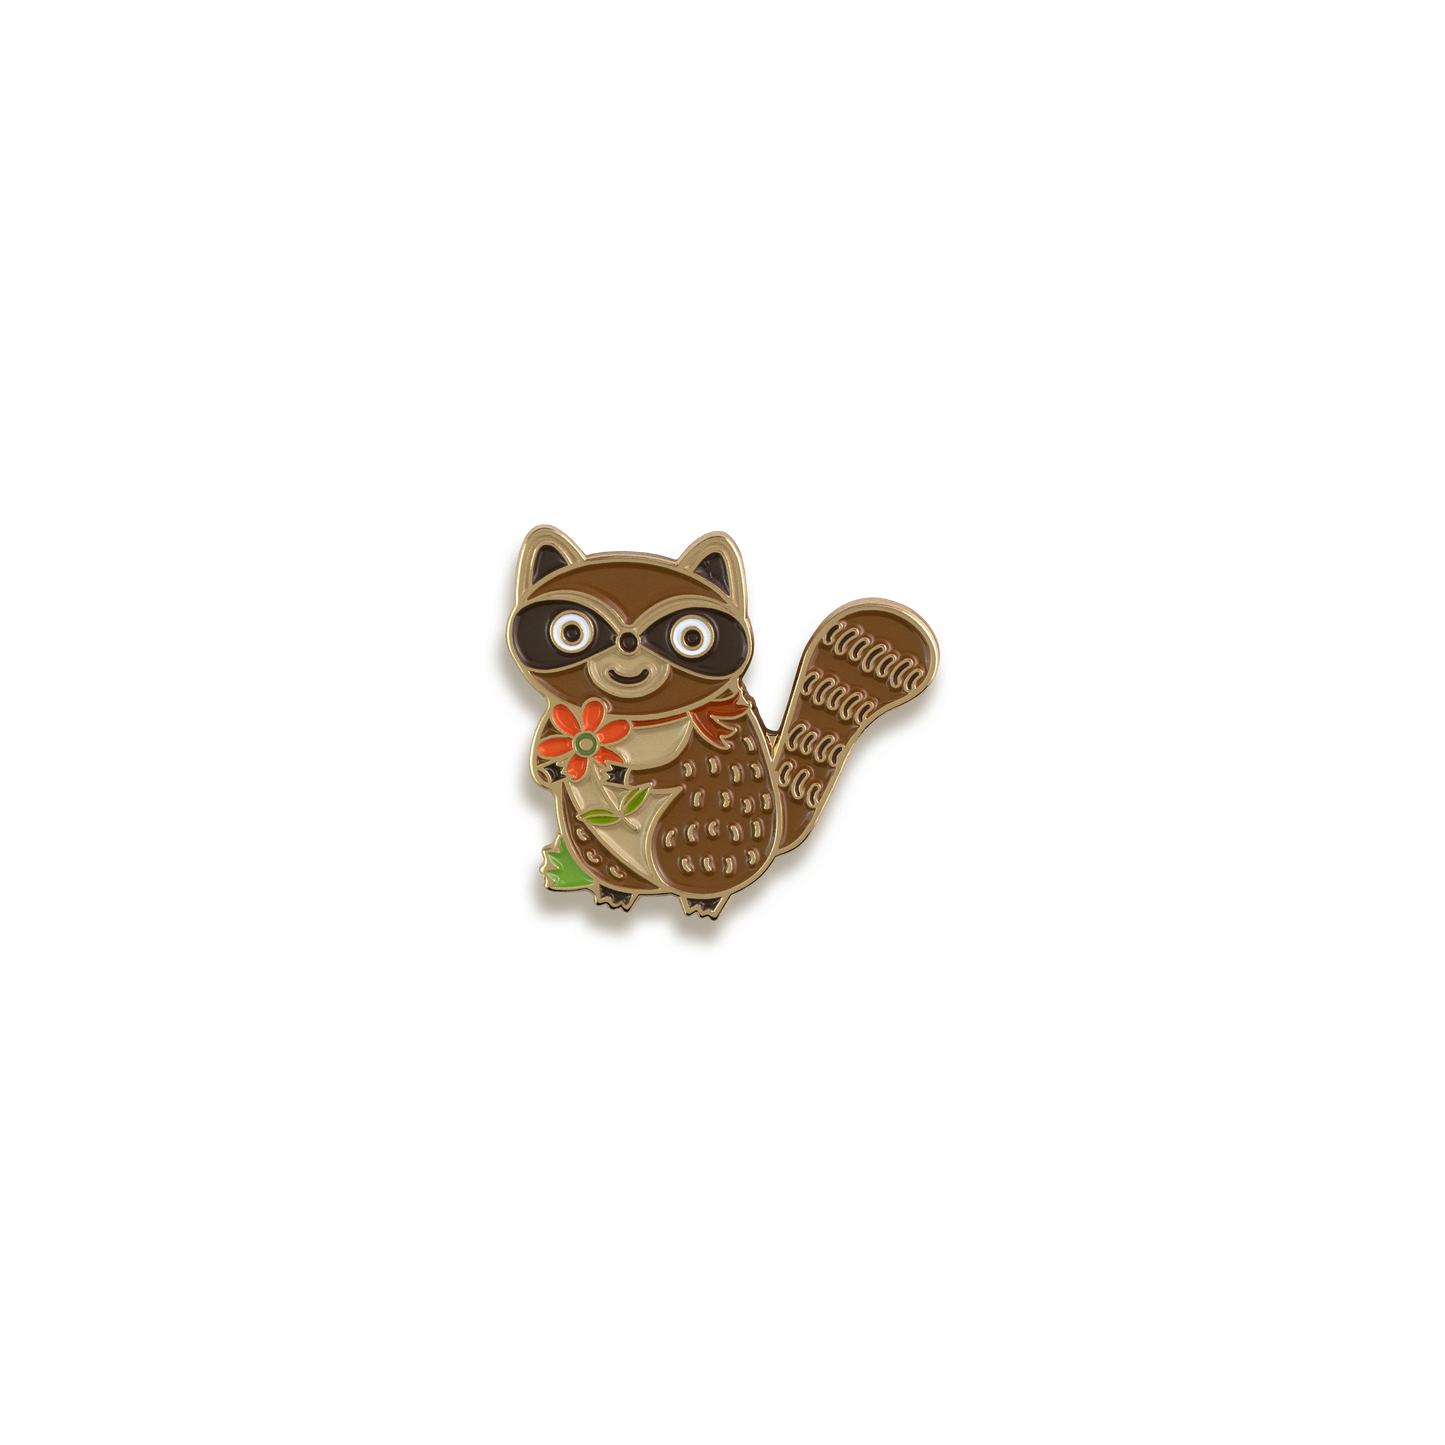 Raccoon Enamel Pin by Night Owl Paper Goods